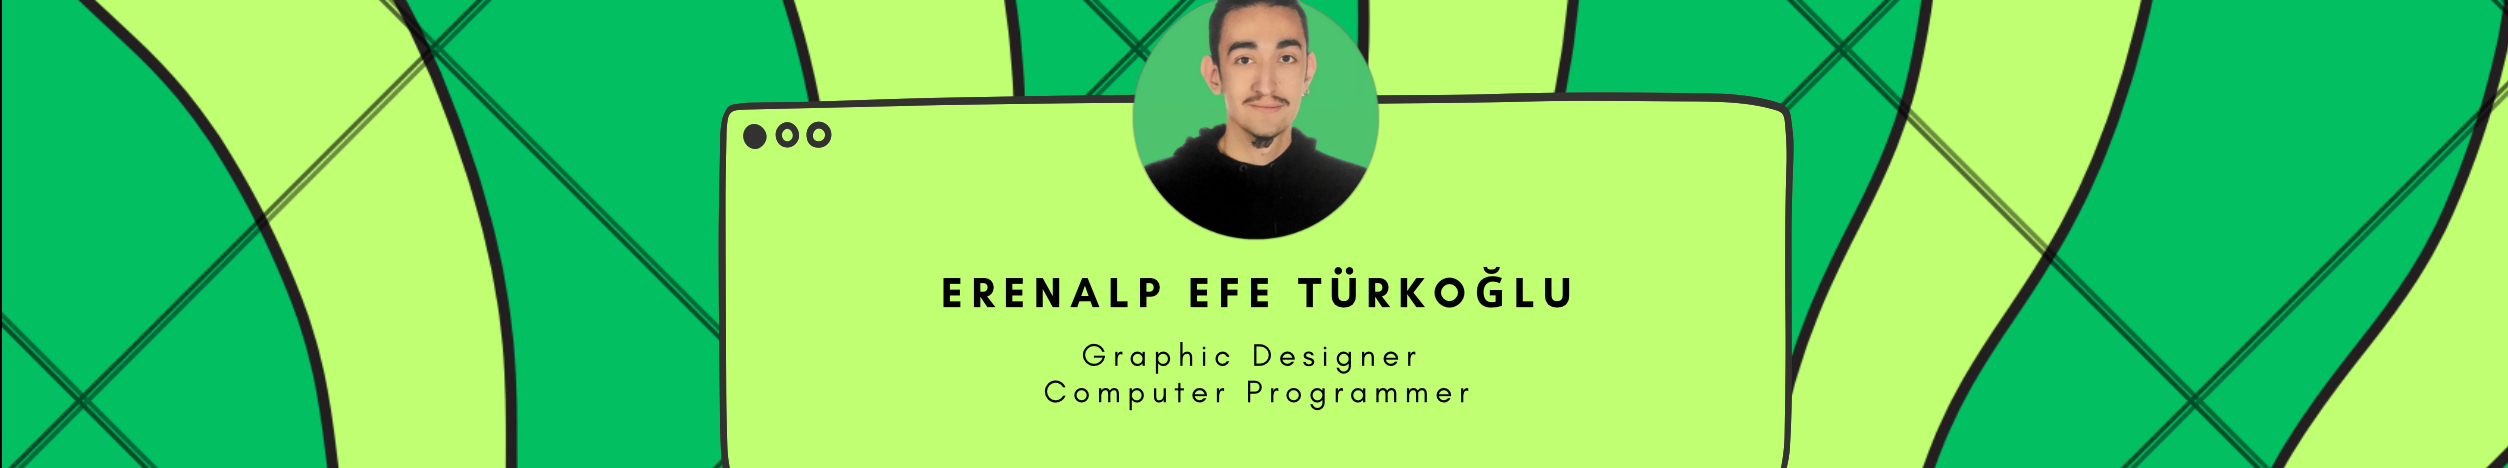 Banner de perfil de Erenalp Efe Türkoğlu